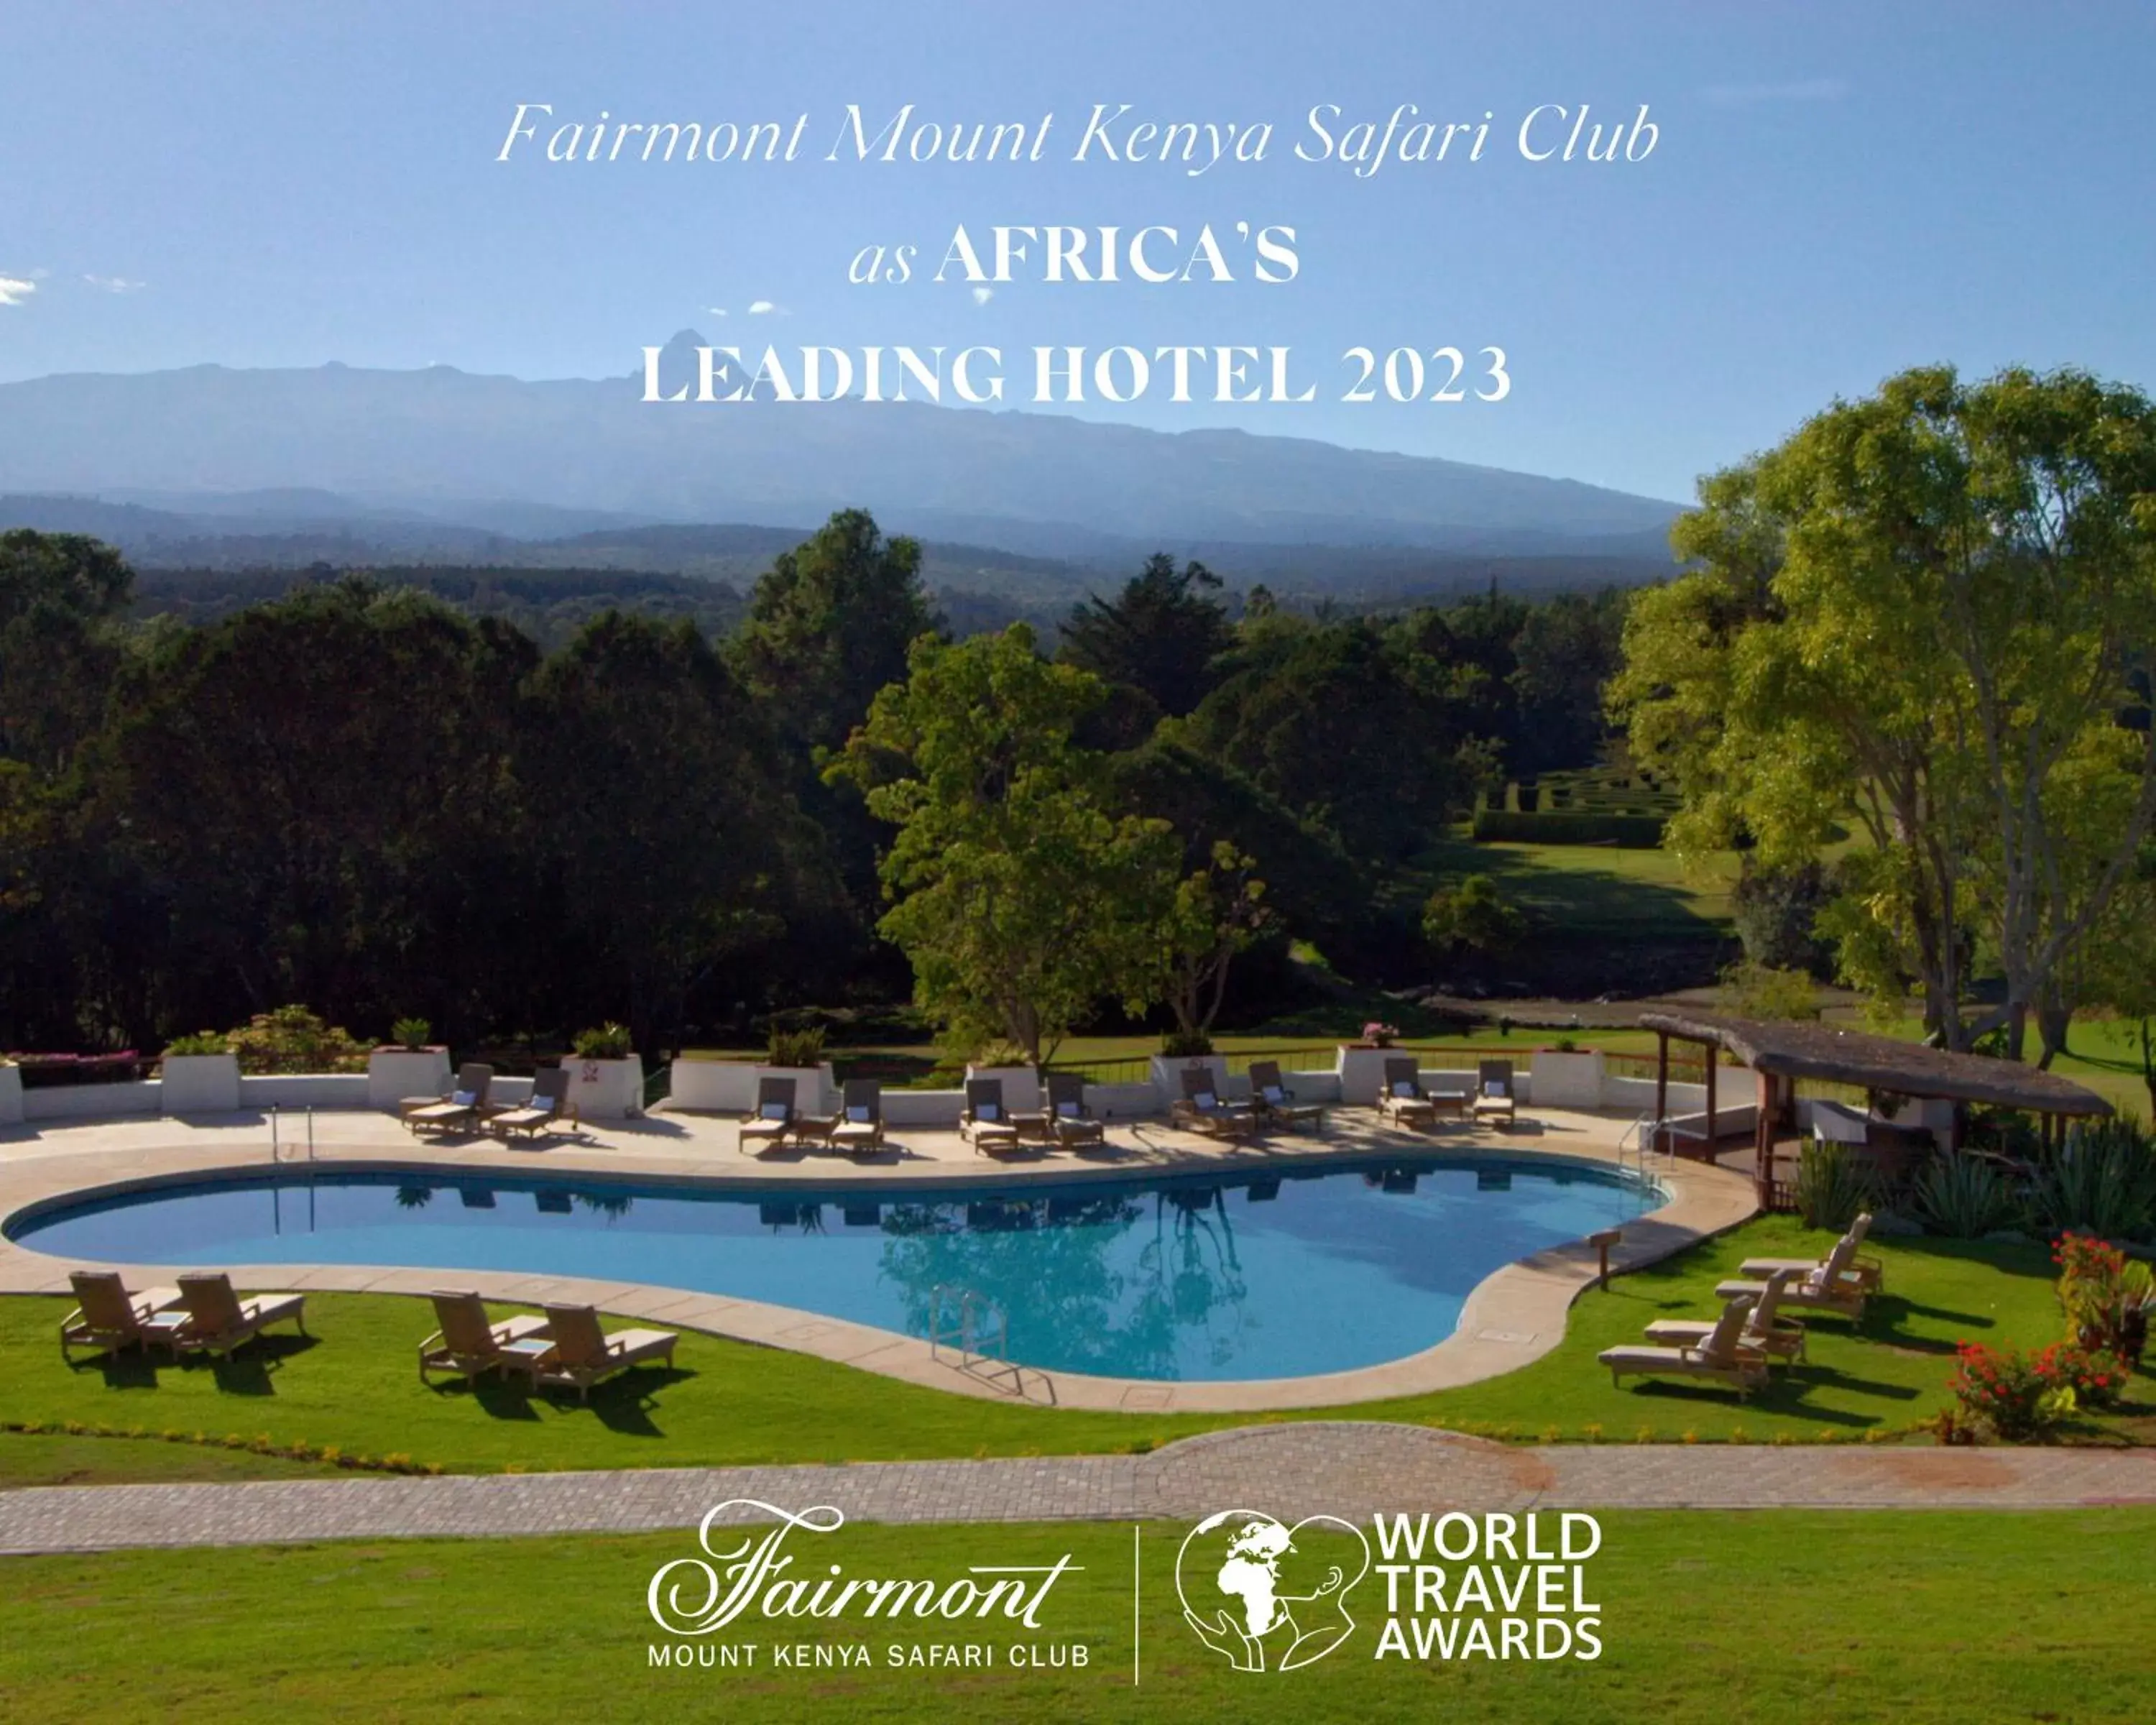 Swimming Pool in Fairmont Mount Kenya Safari Club